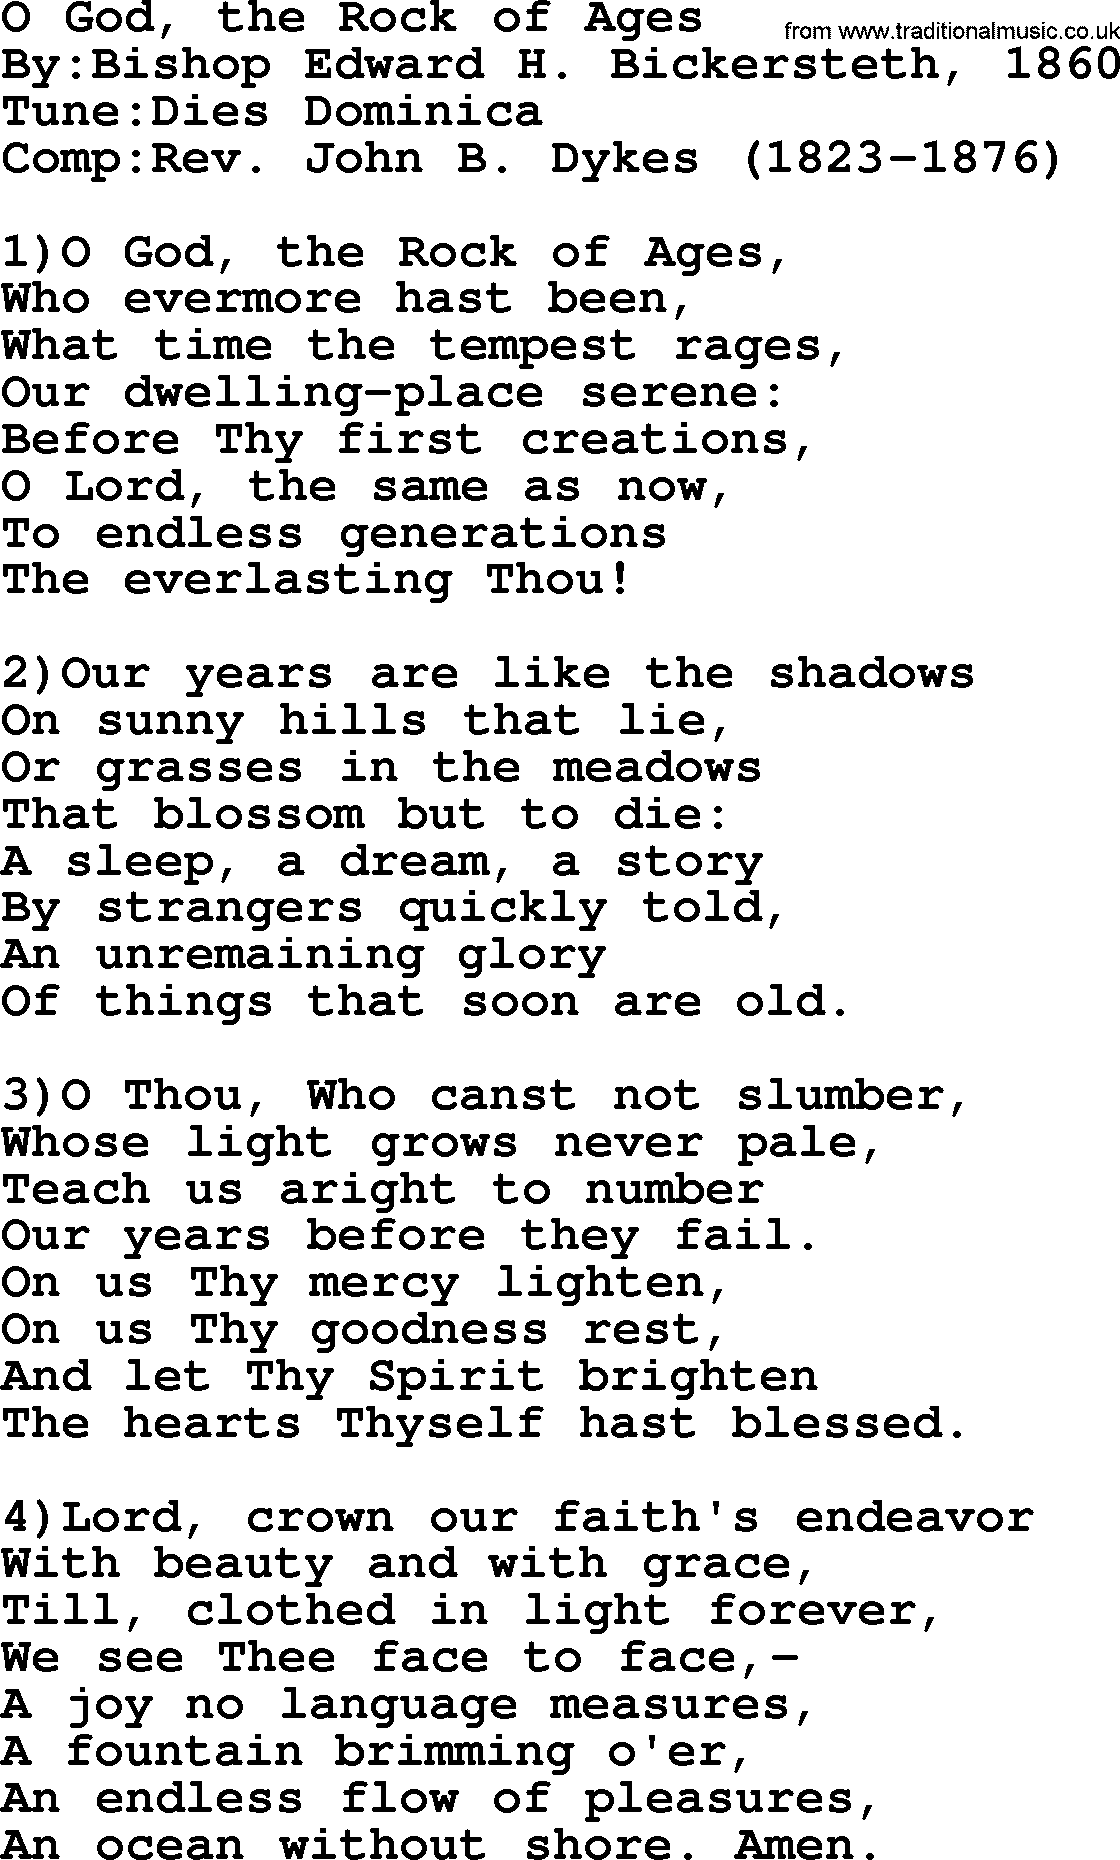 Methodist Hymn: O God, The Rock Of Ages, lyrics